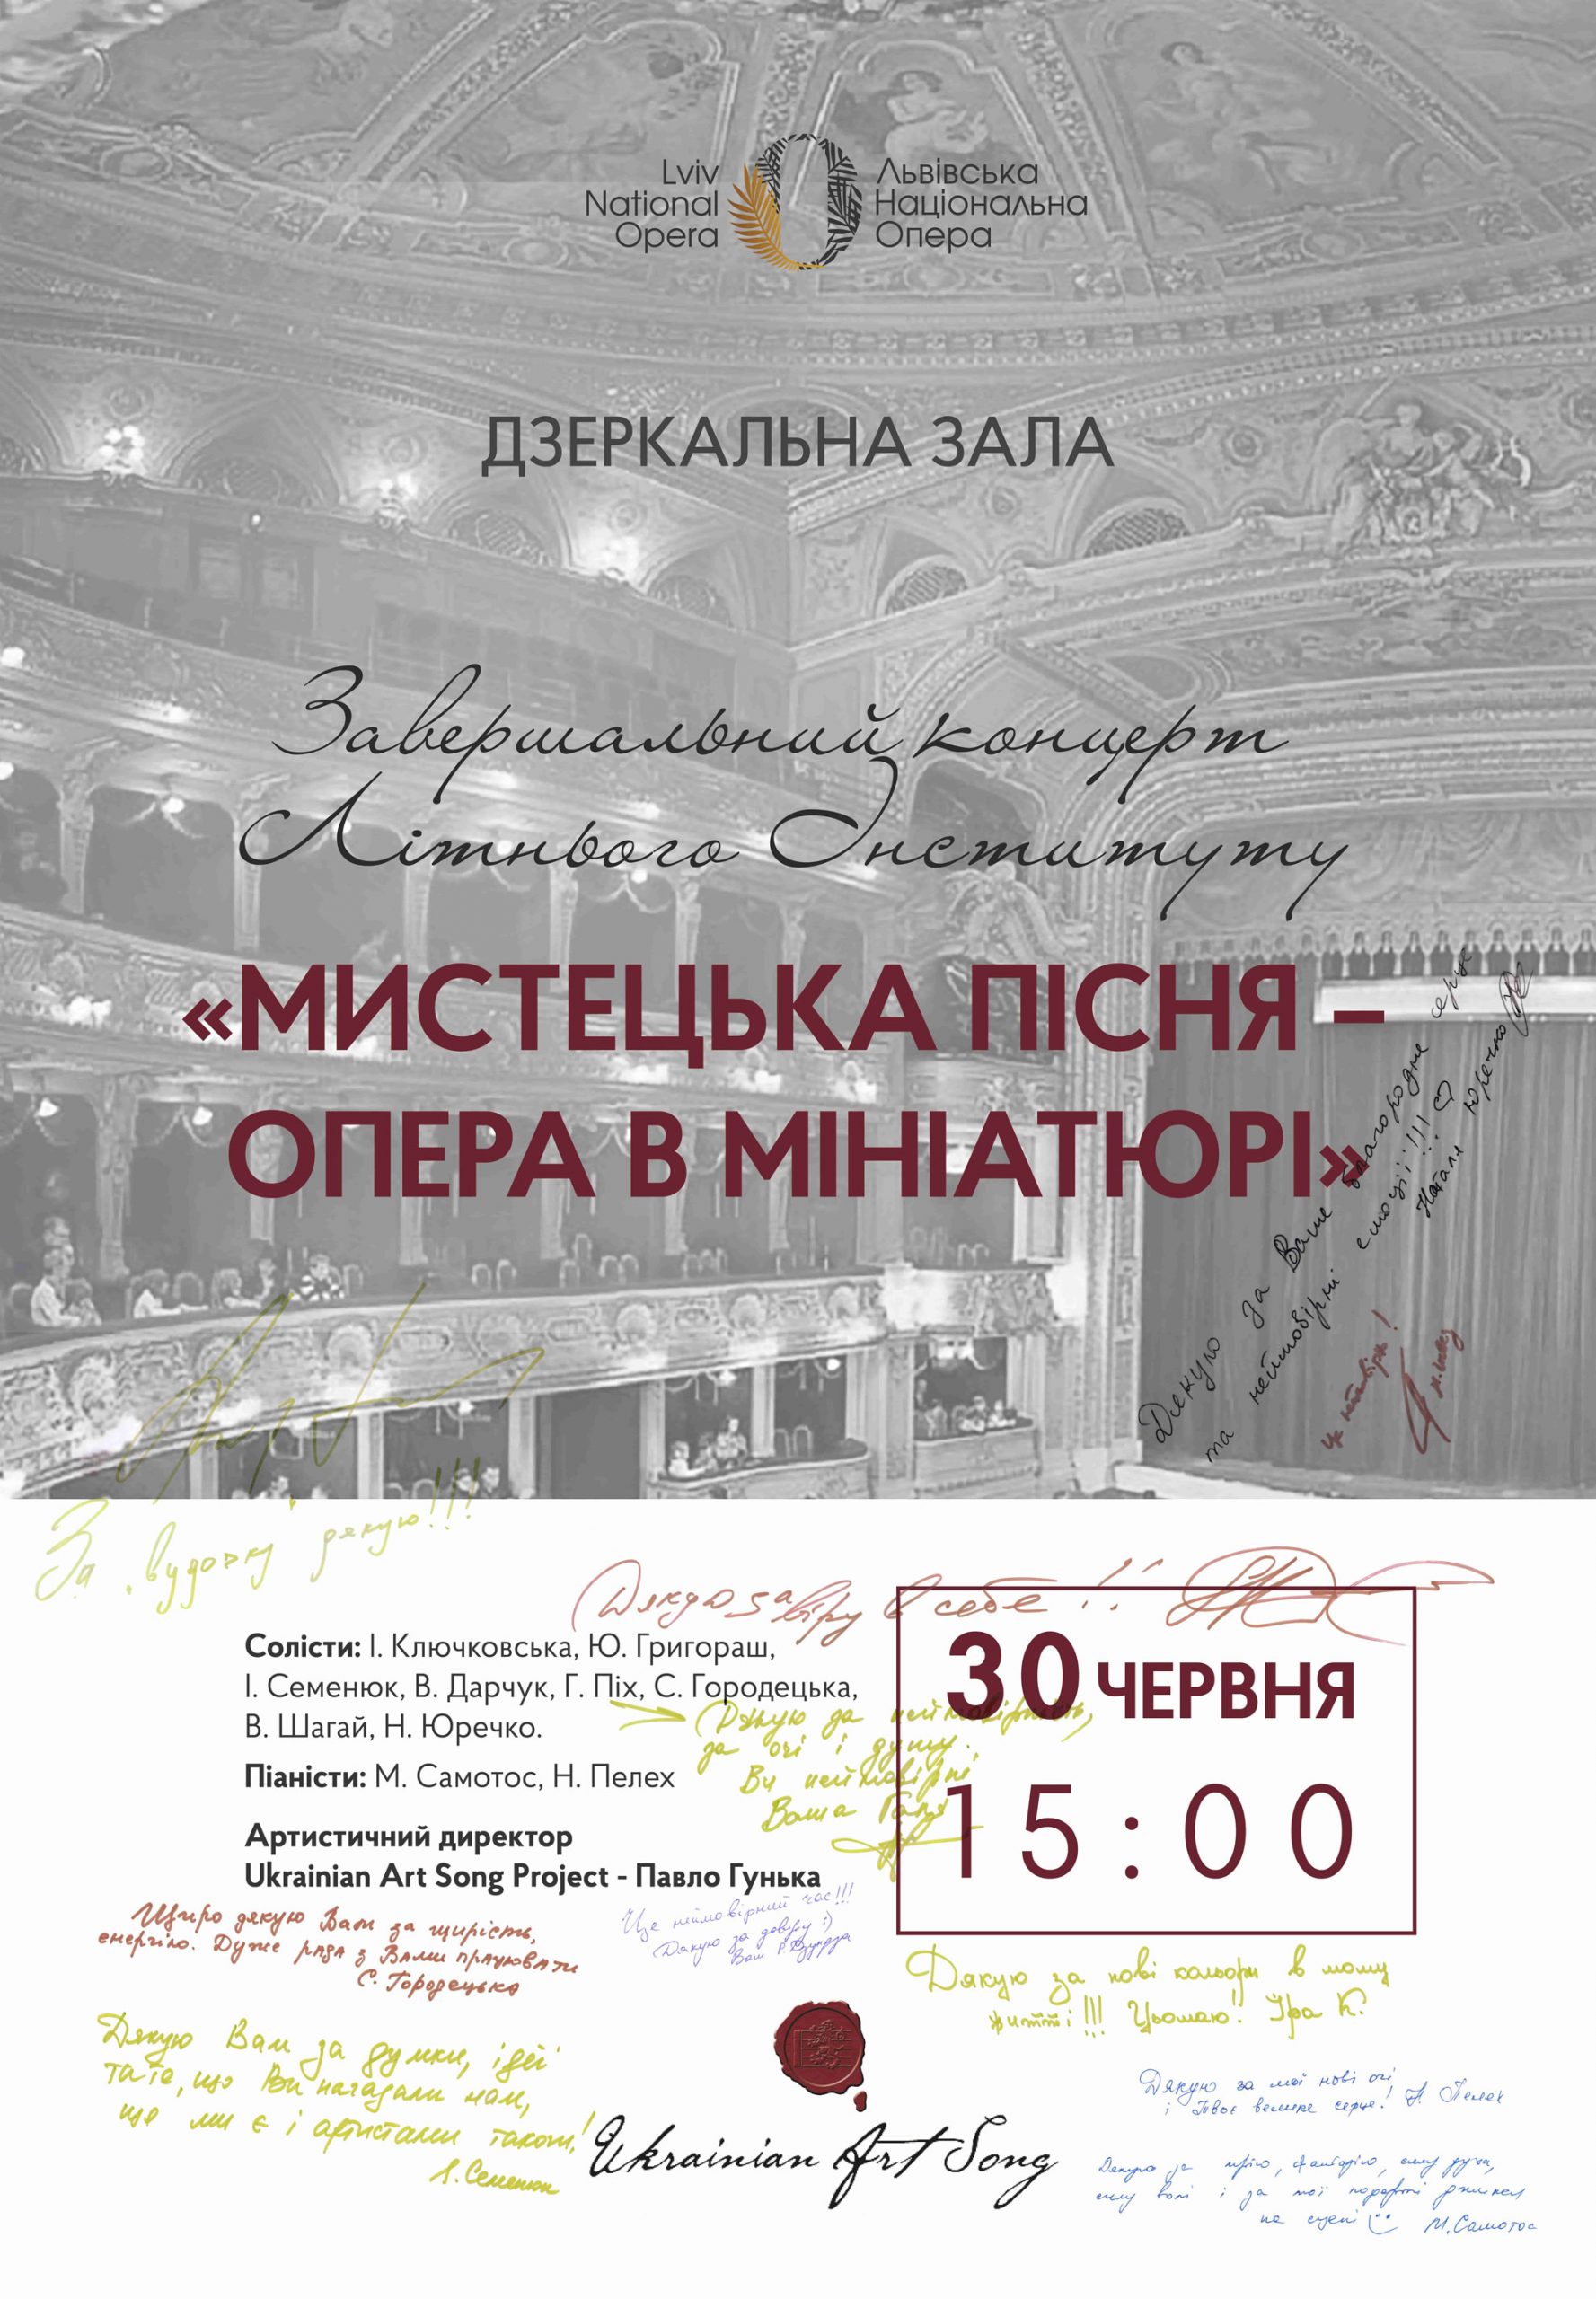 UASP Institute - 'Opera In Miniature' - Signed by all the artists- Lviv Opera House, Ukraine - June 2019